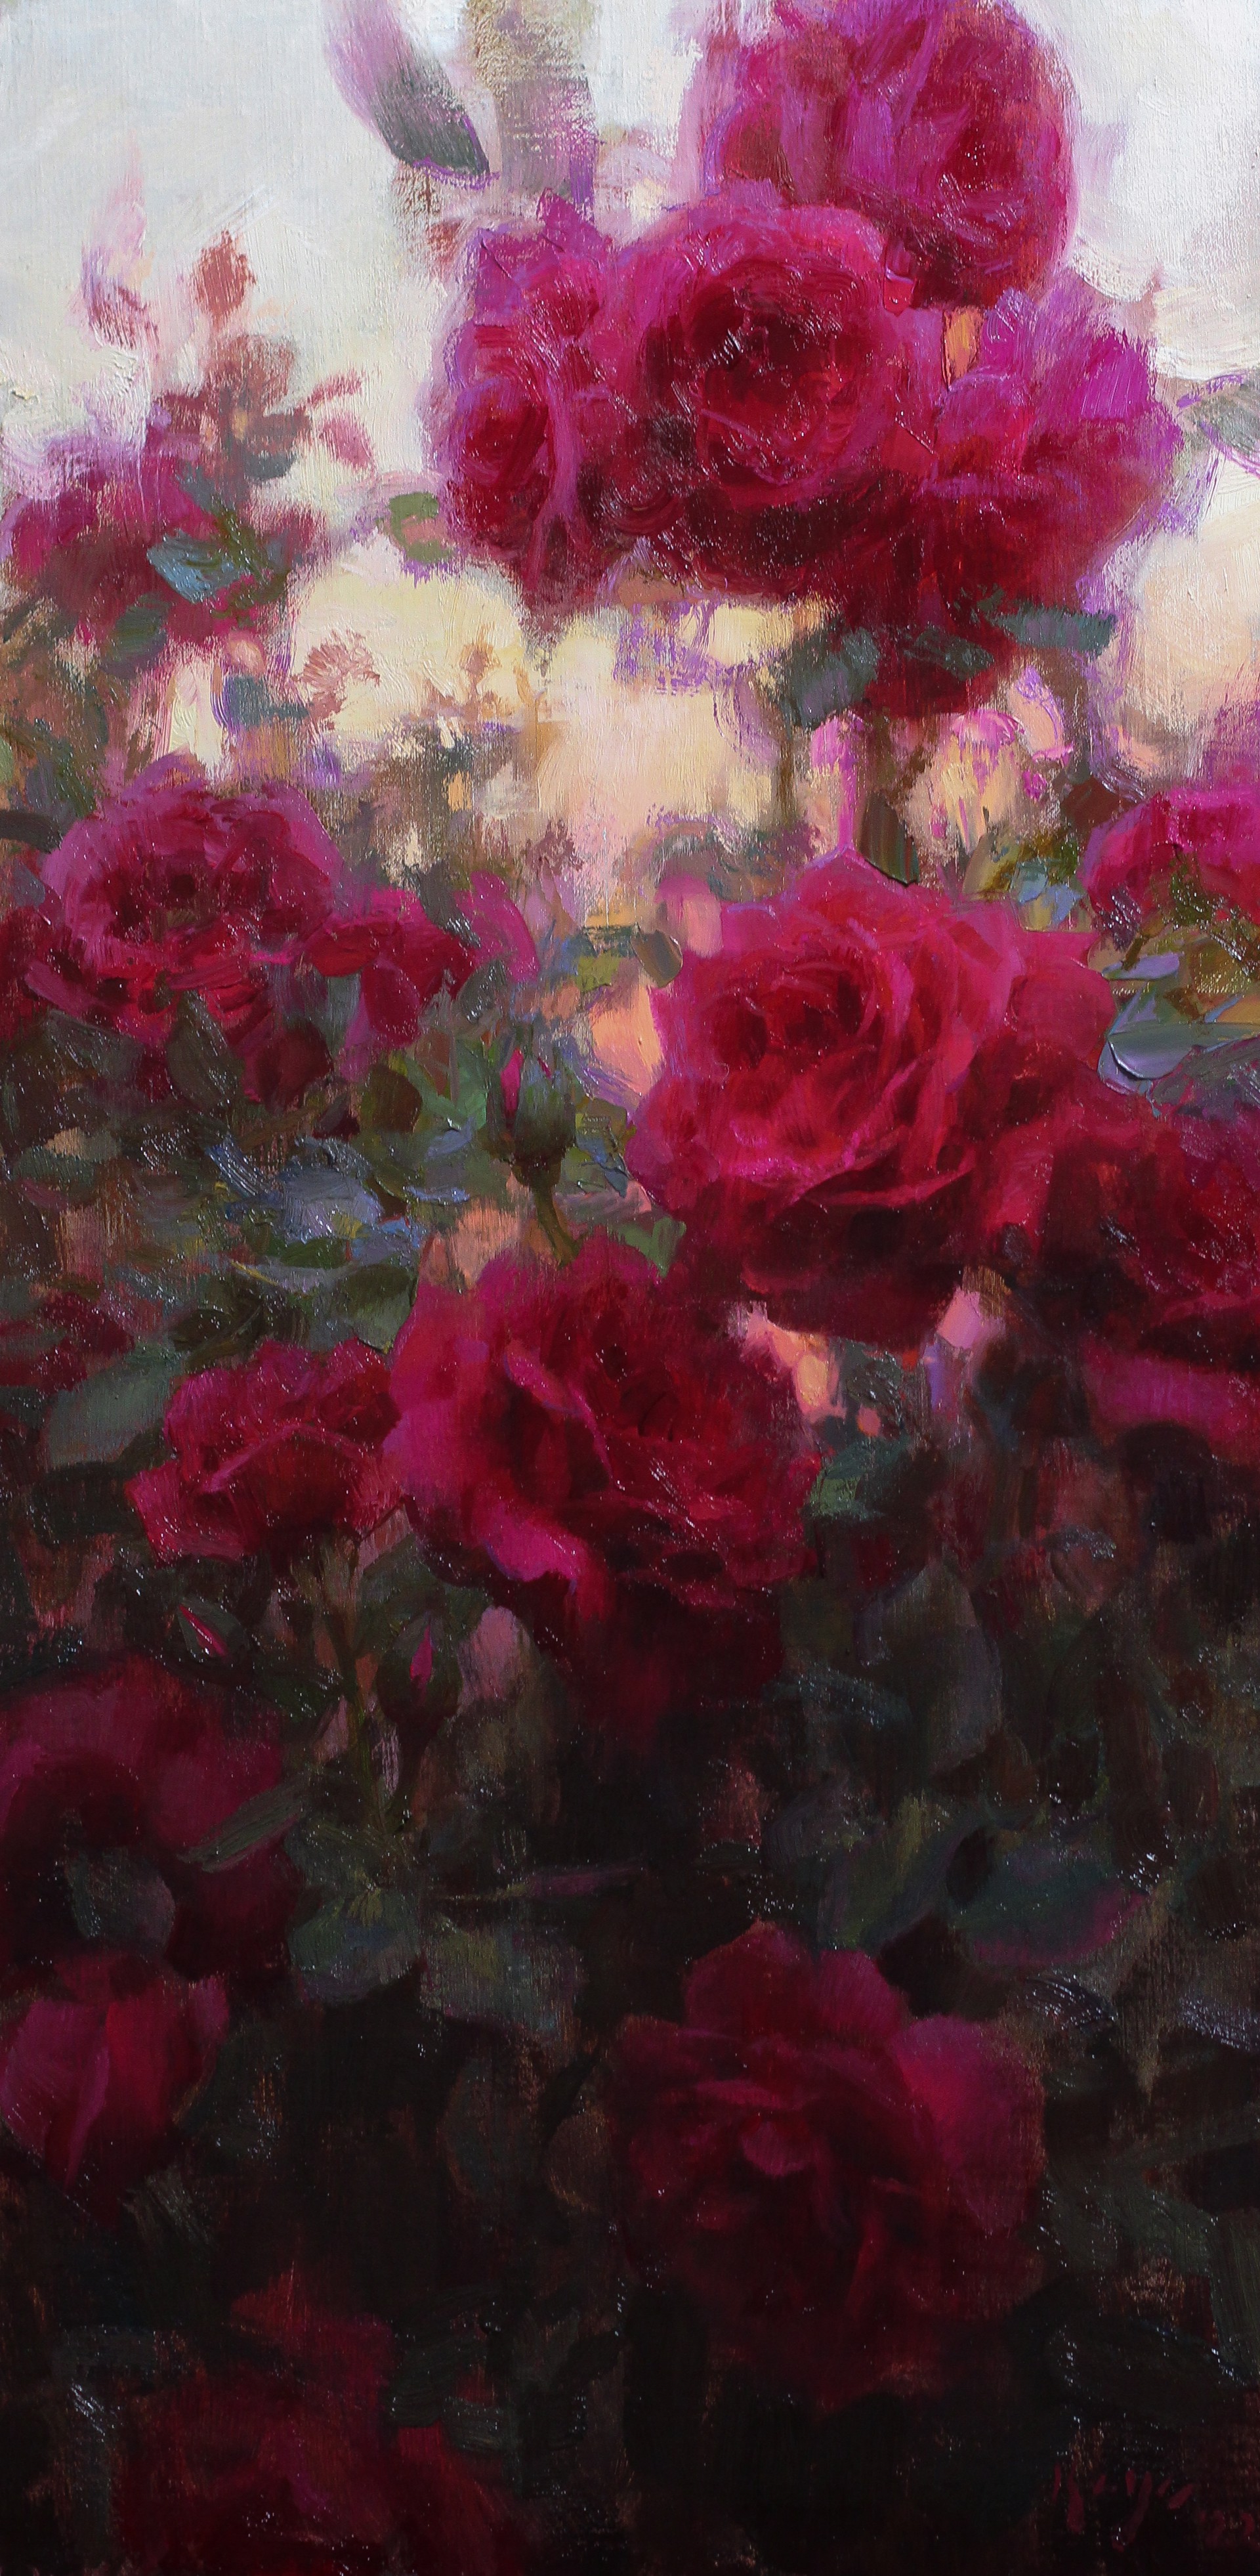 Carmine Roses by Daniel Keys